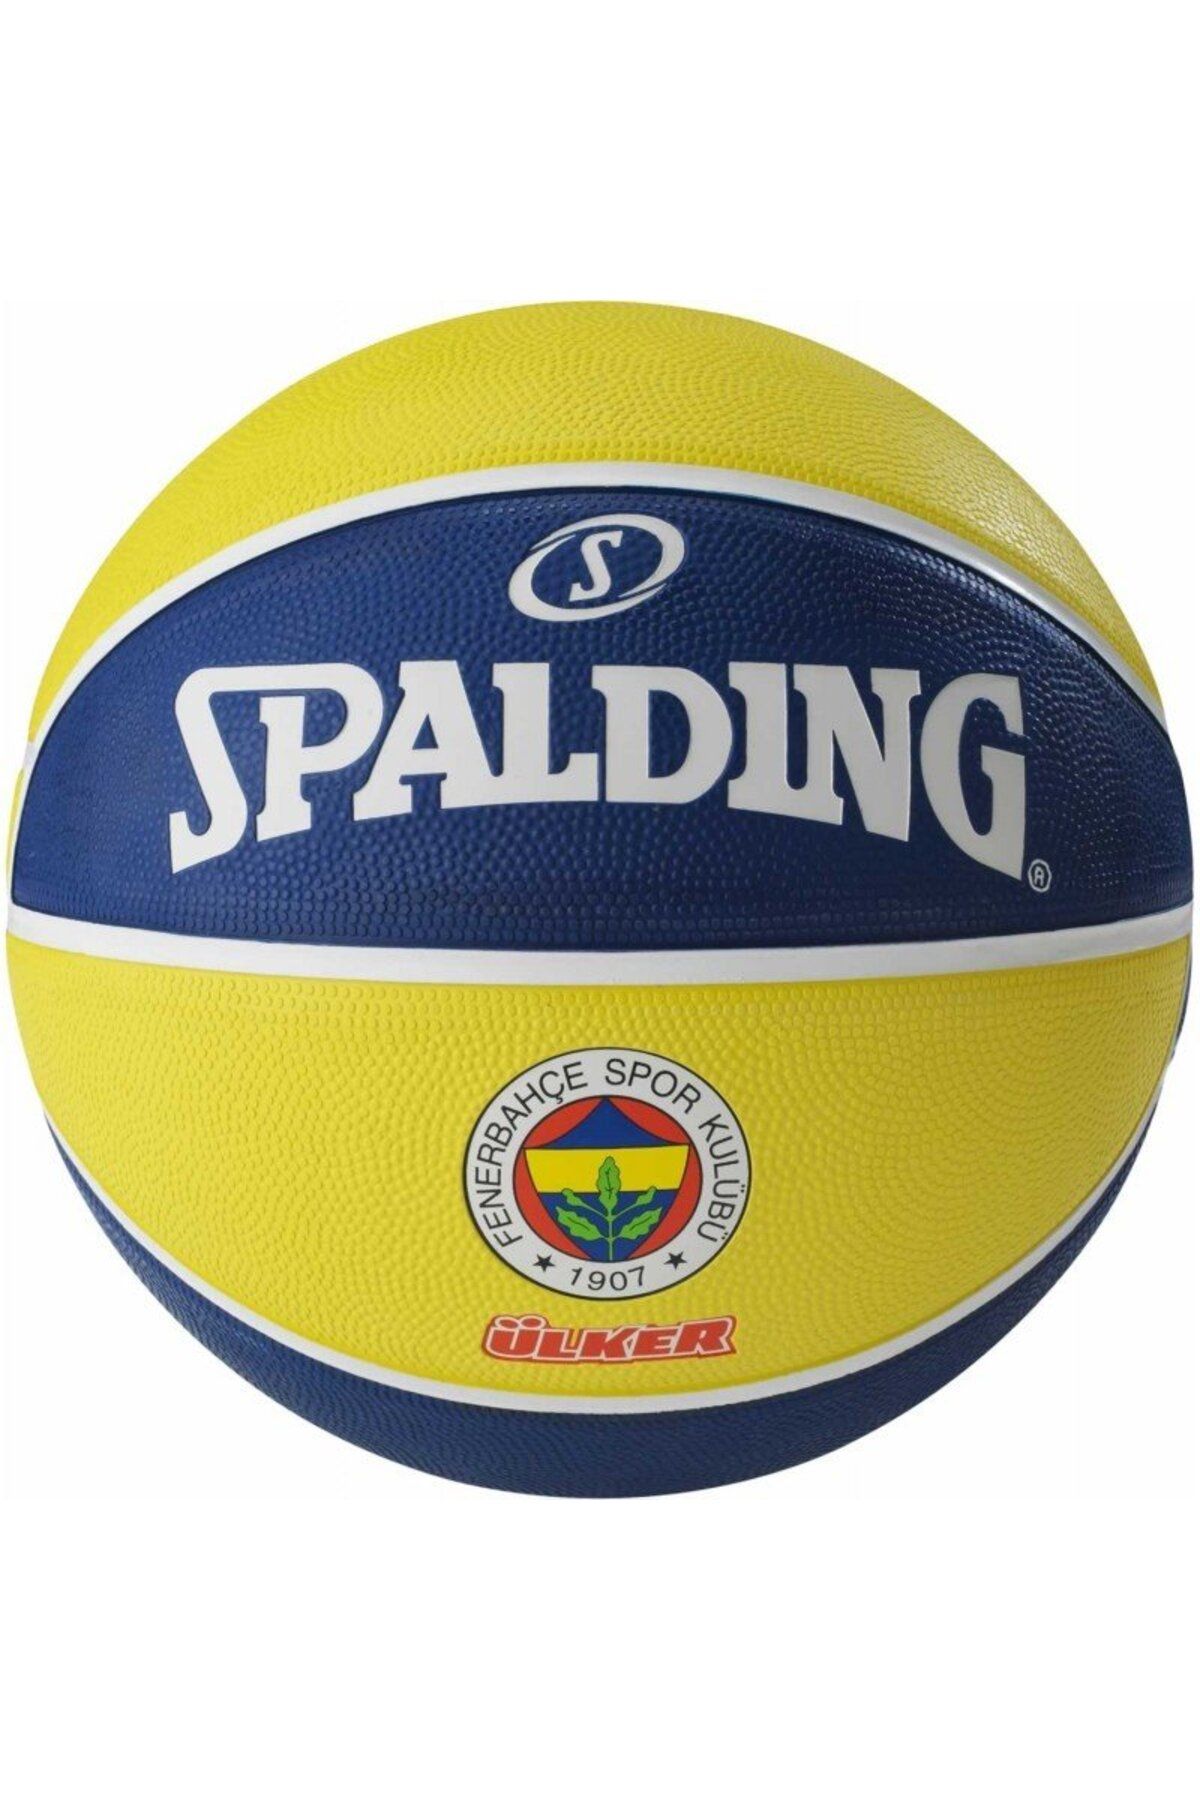 Spalding Euroleague Fenerbahçe Sz7 Basketbol Topu